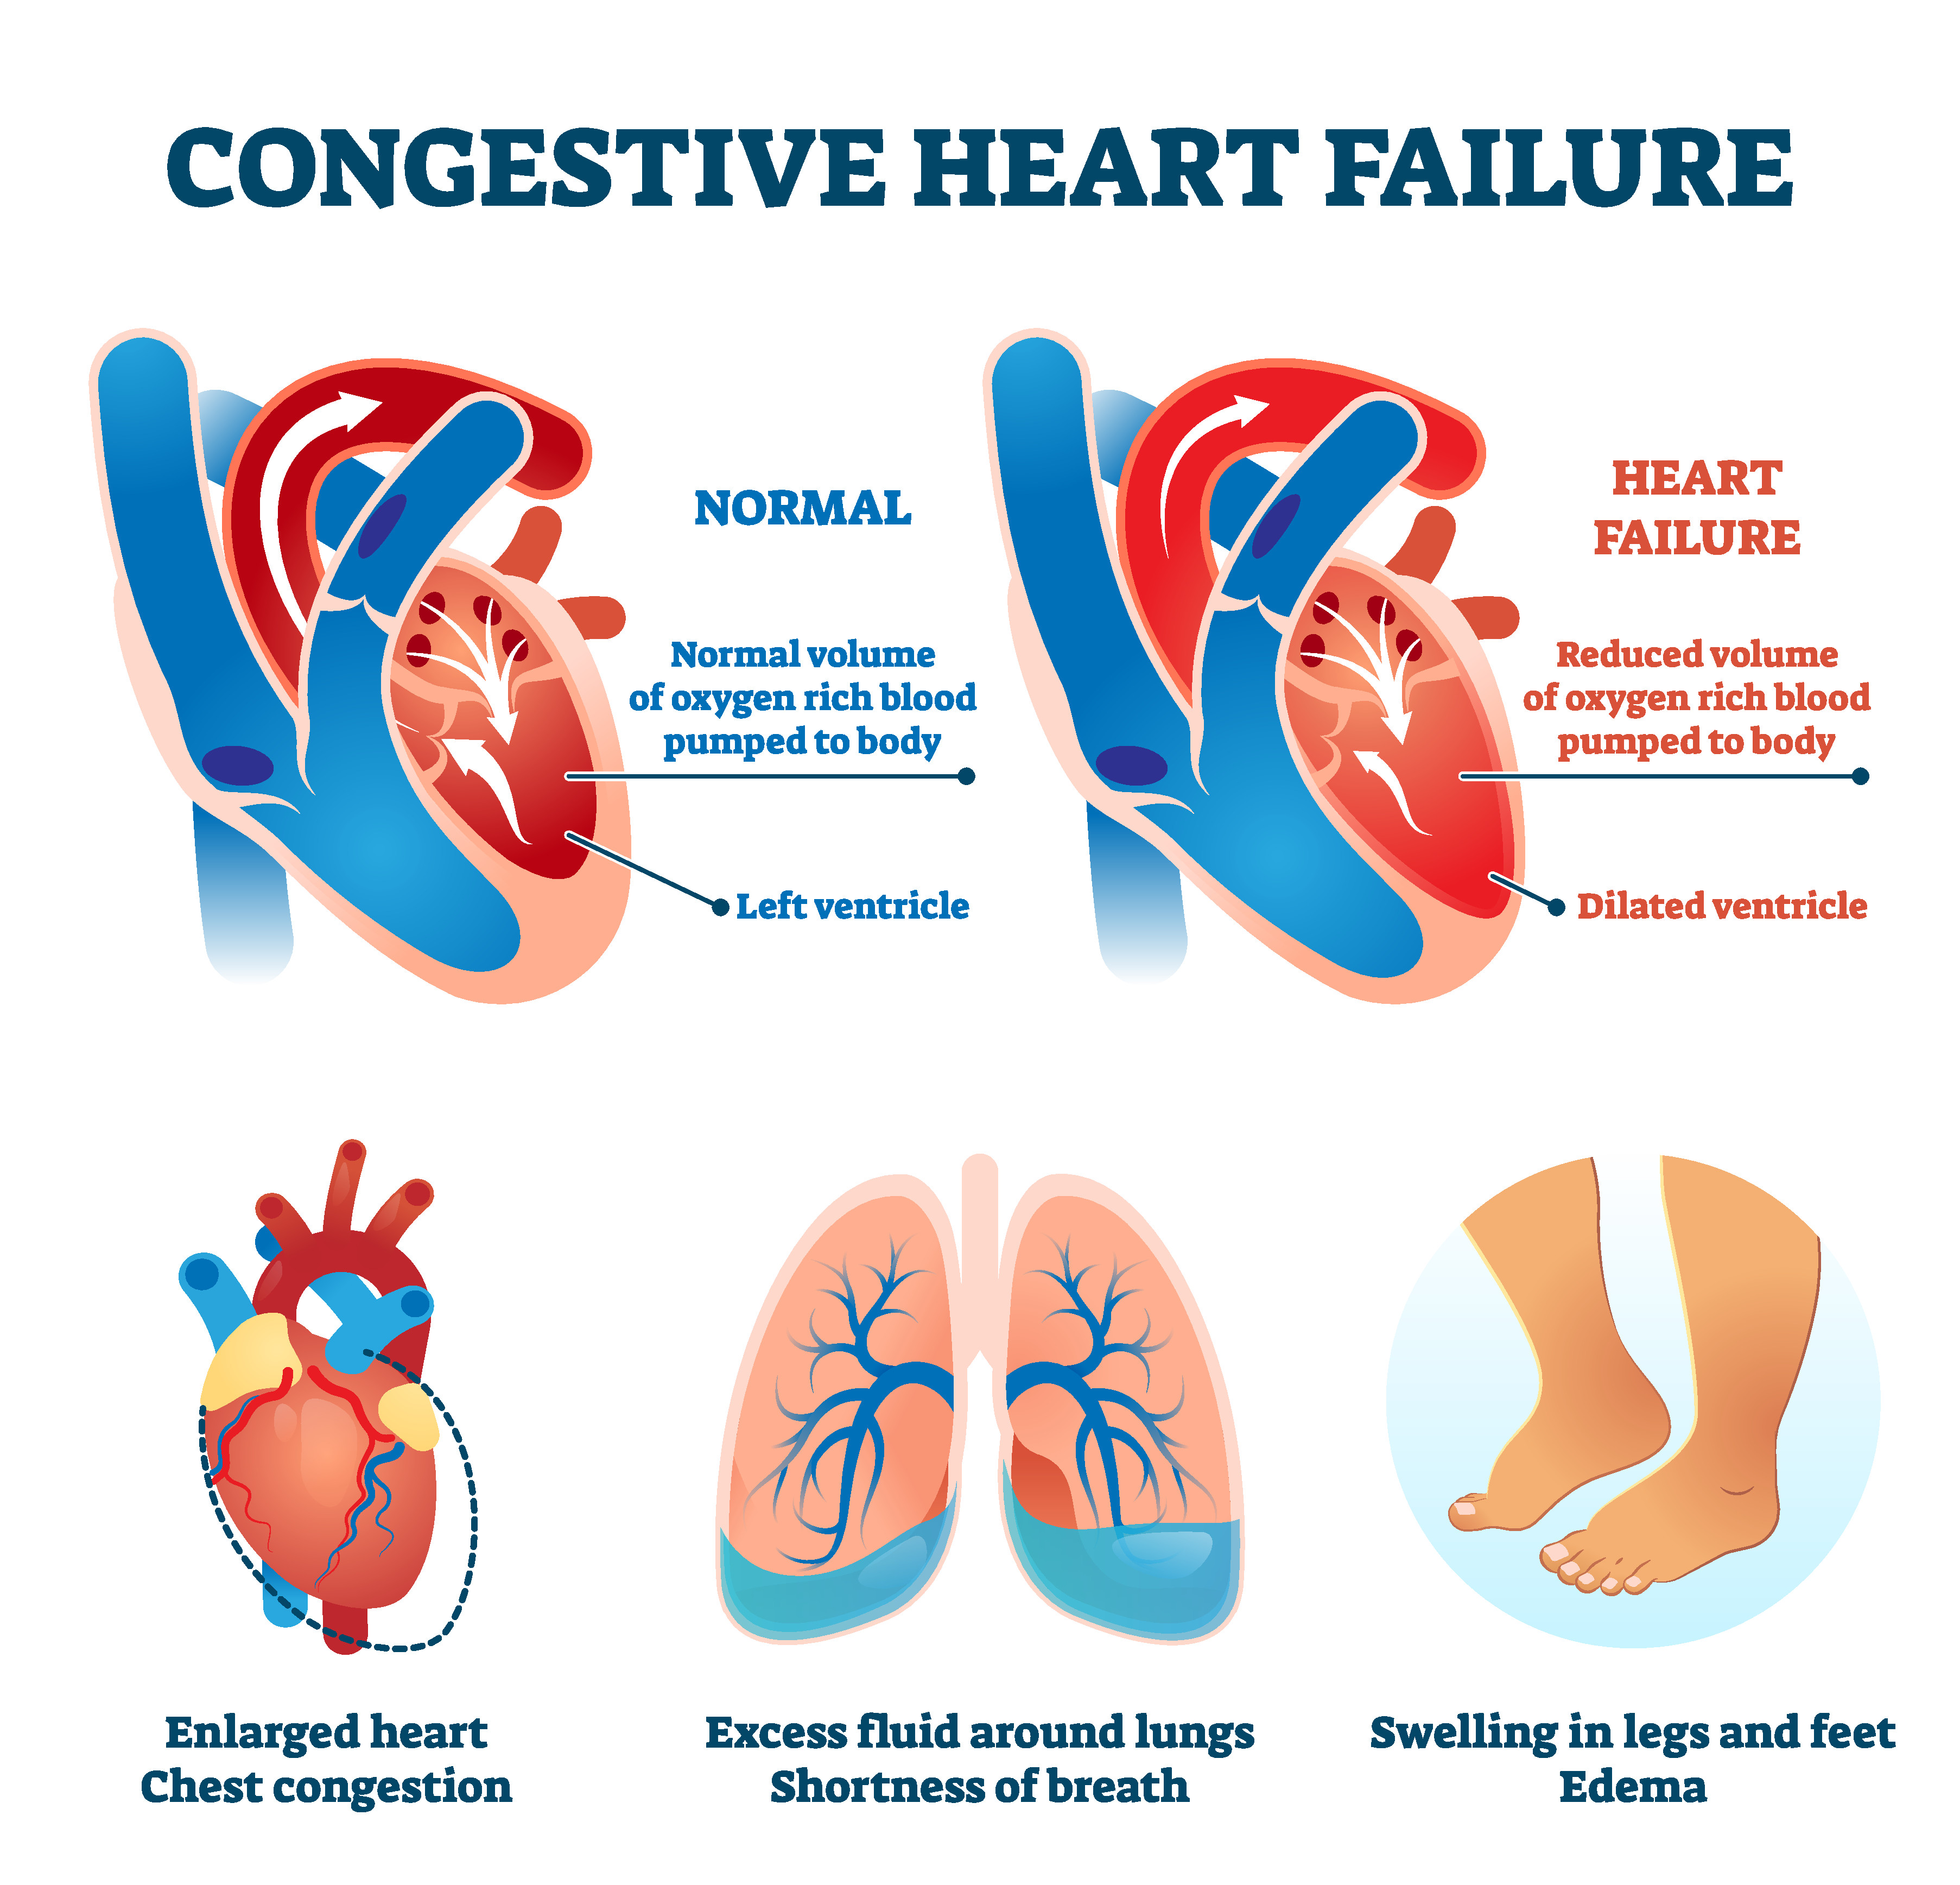 Congestive Heart Failure The Johns Hopkins Patient Guide To Diabetes